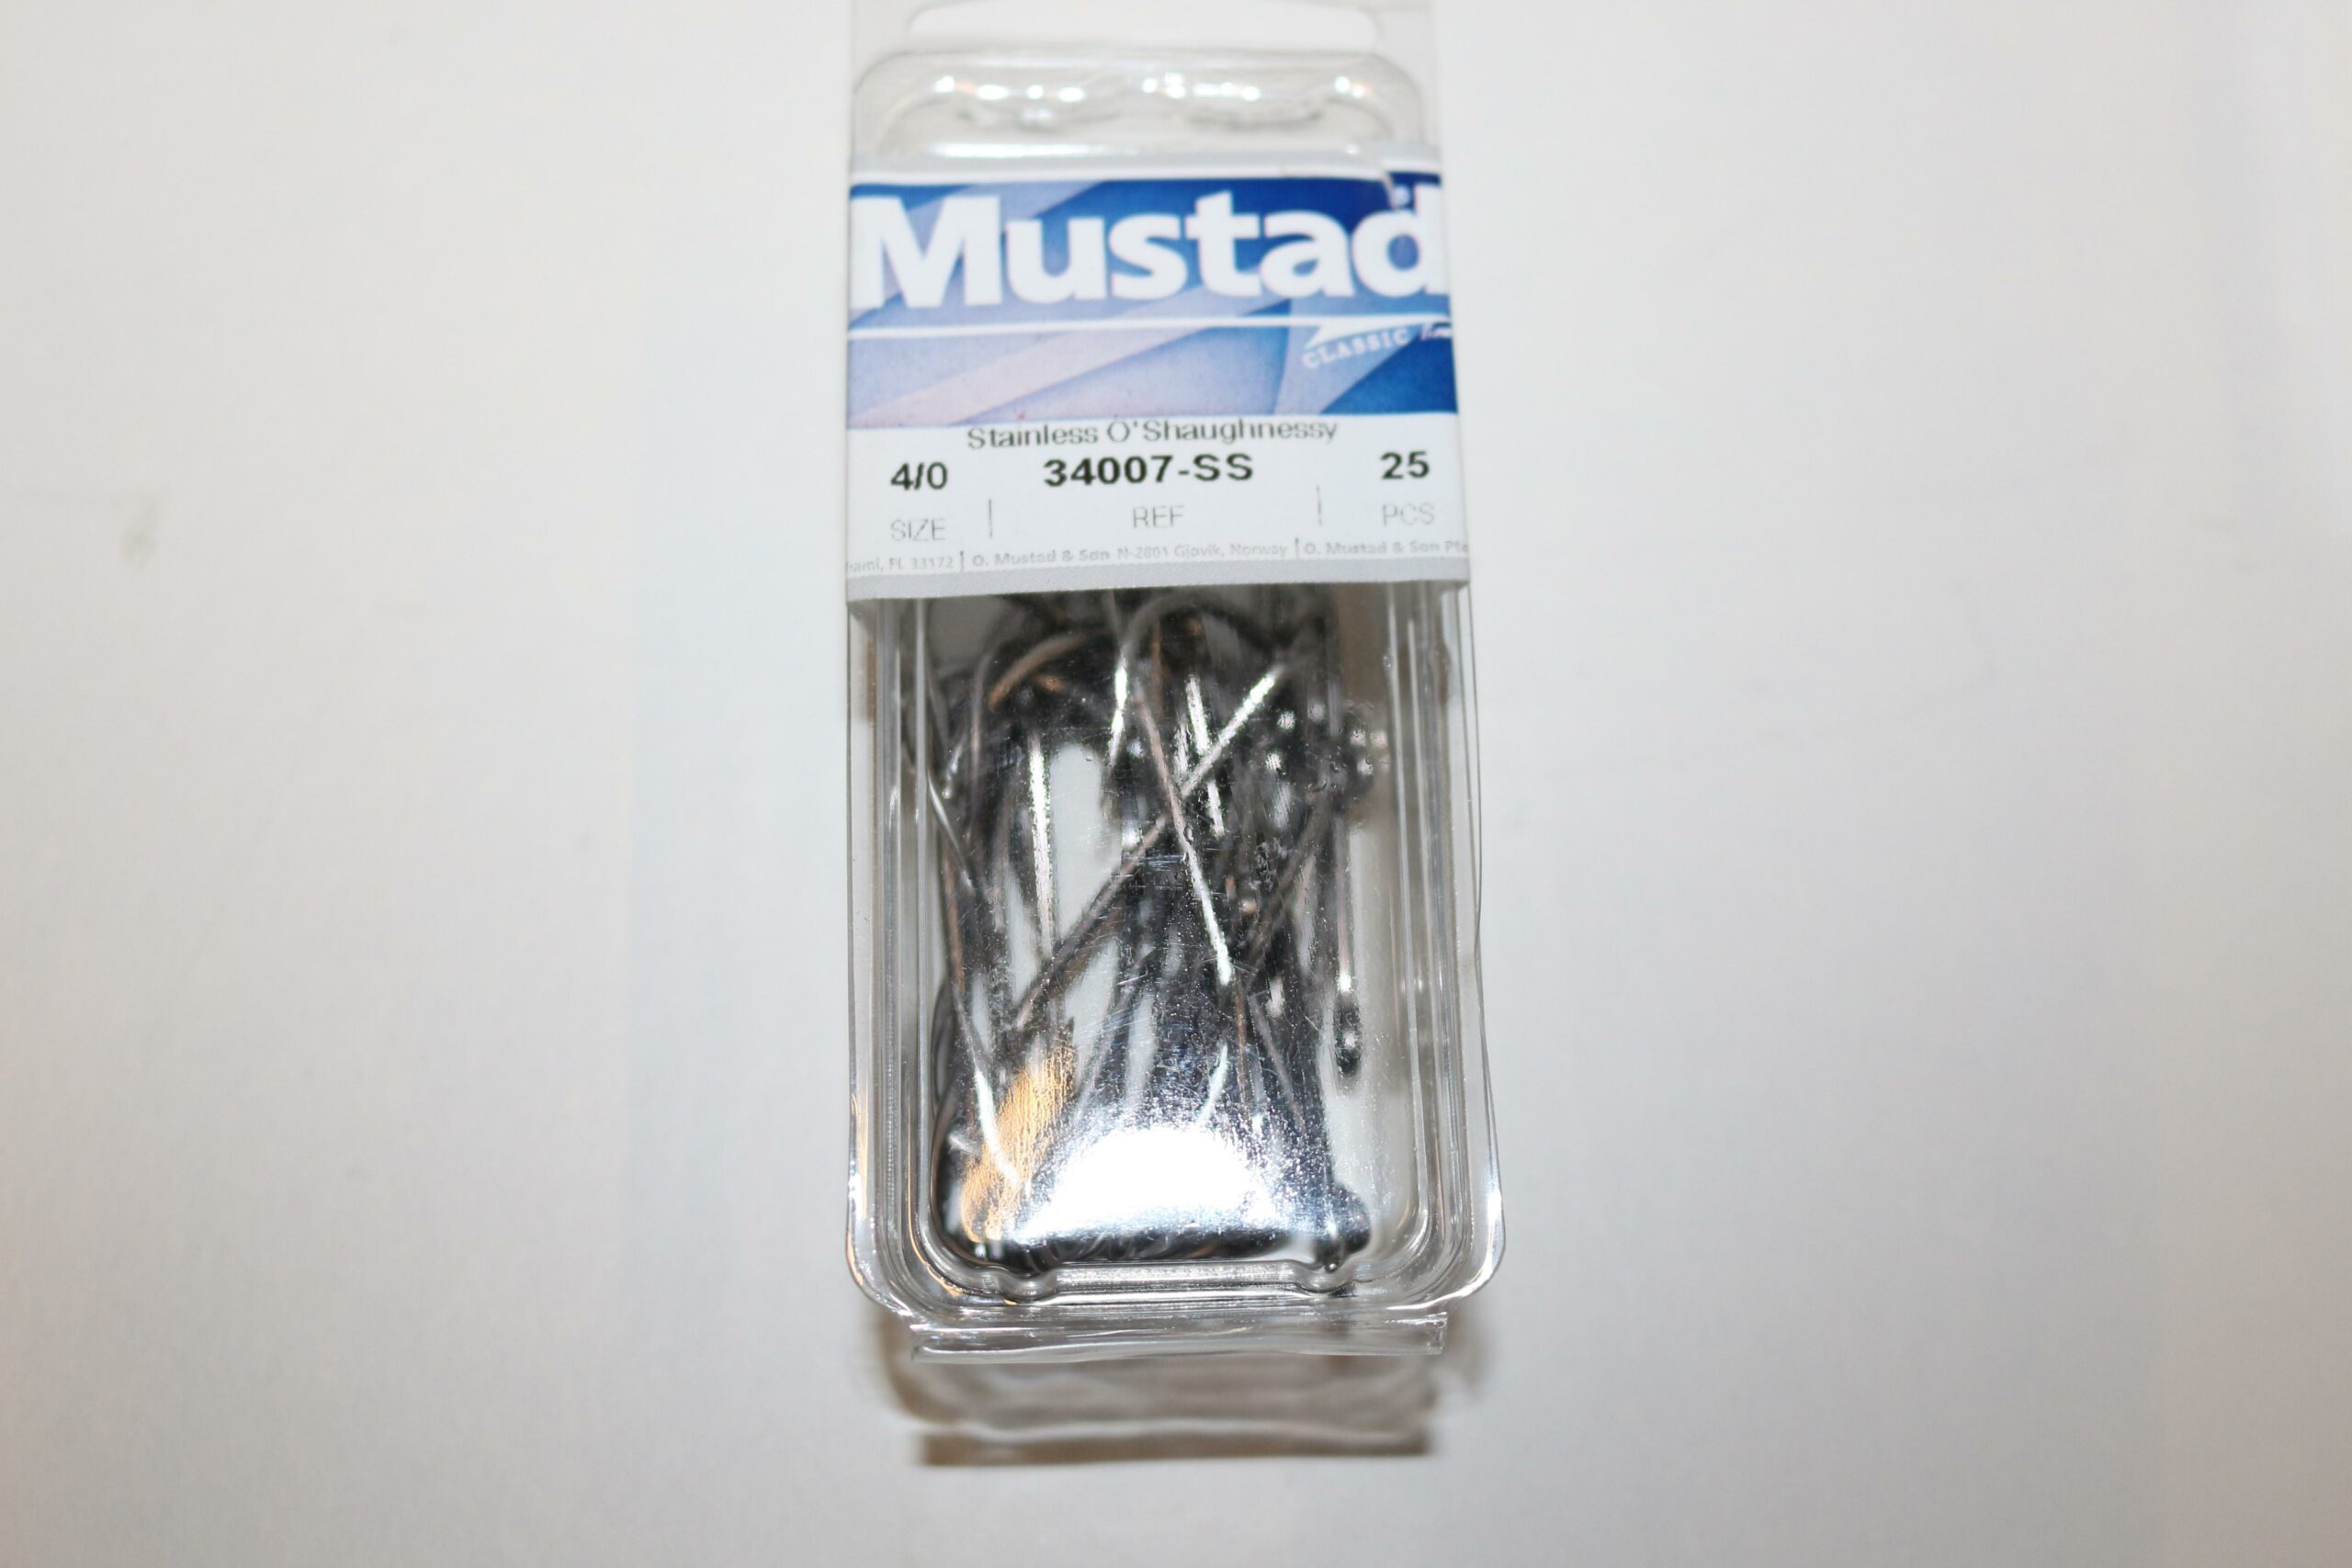 Mustad 34007 #4/0 8ct Stainless Oshaunessy Hook